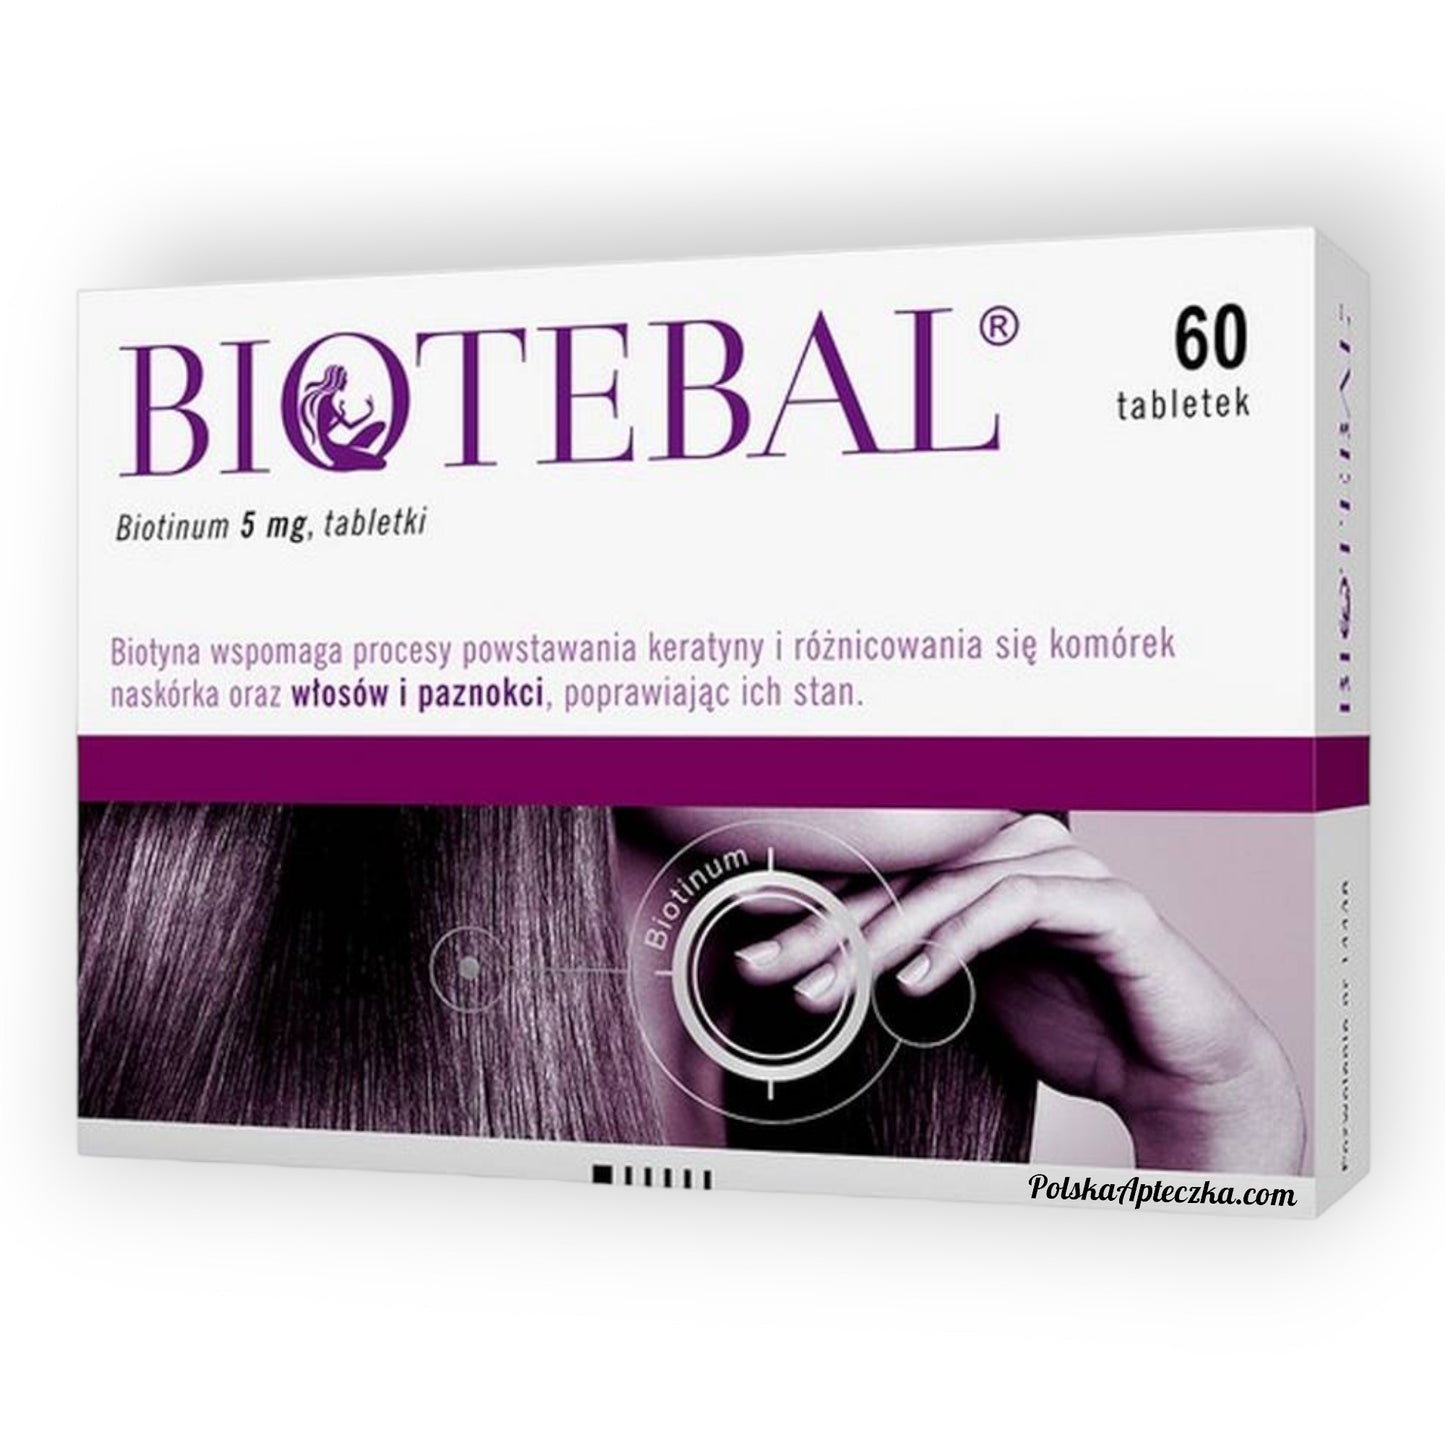 biotebal tablets